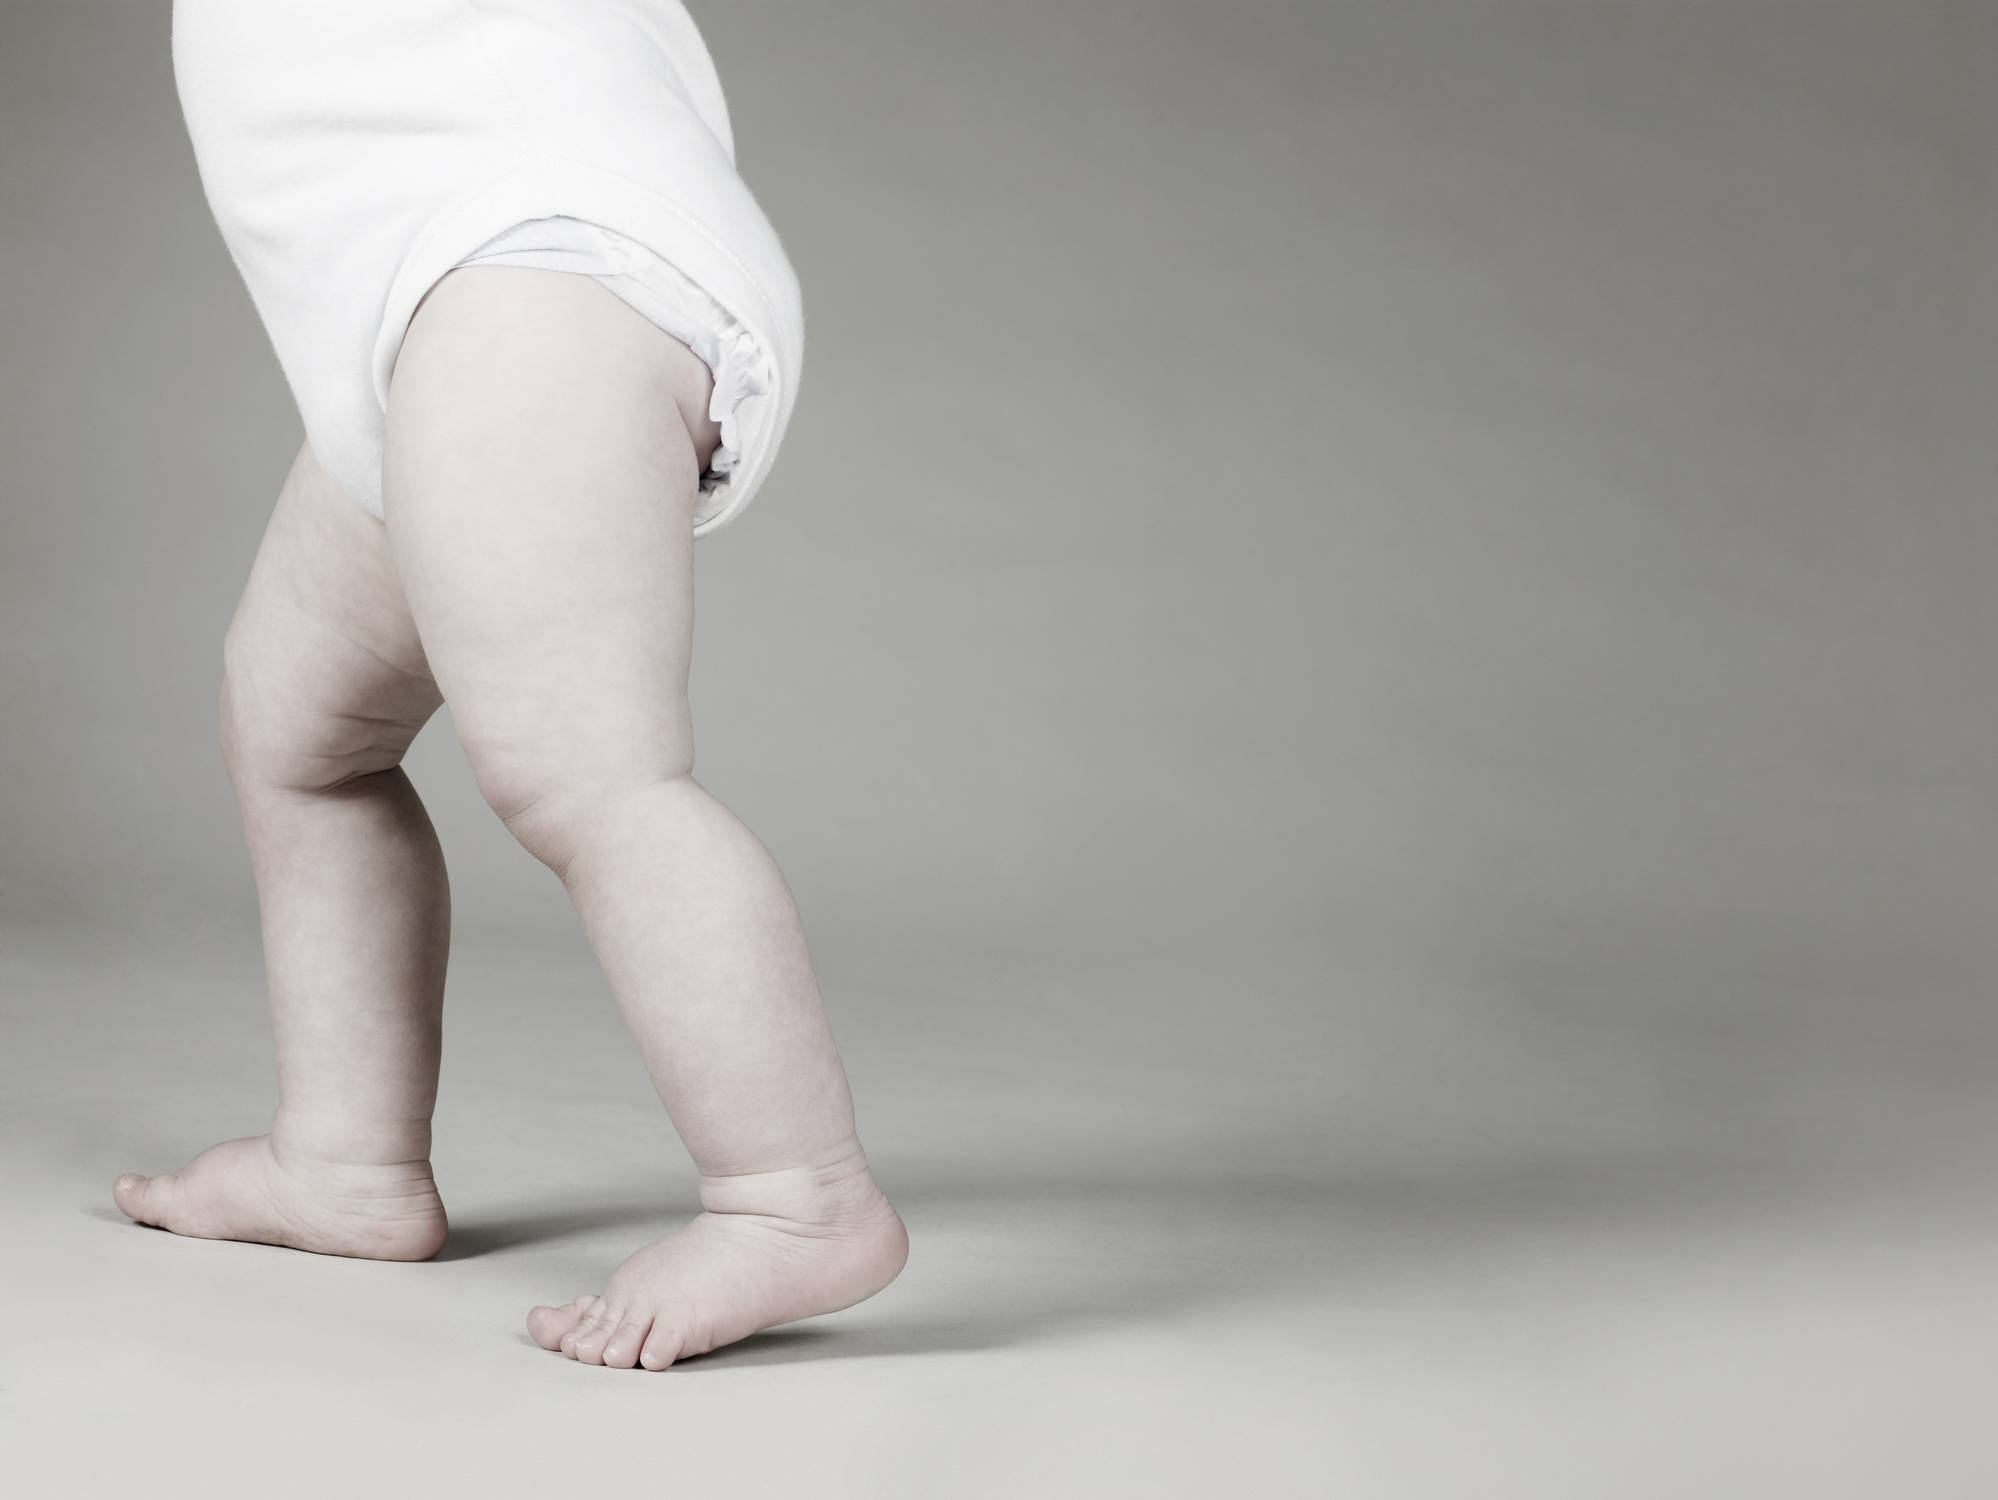 Во сколько месяцев можно ставить ребенка на ножки